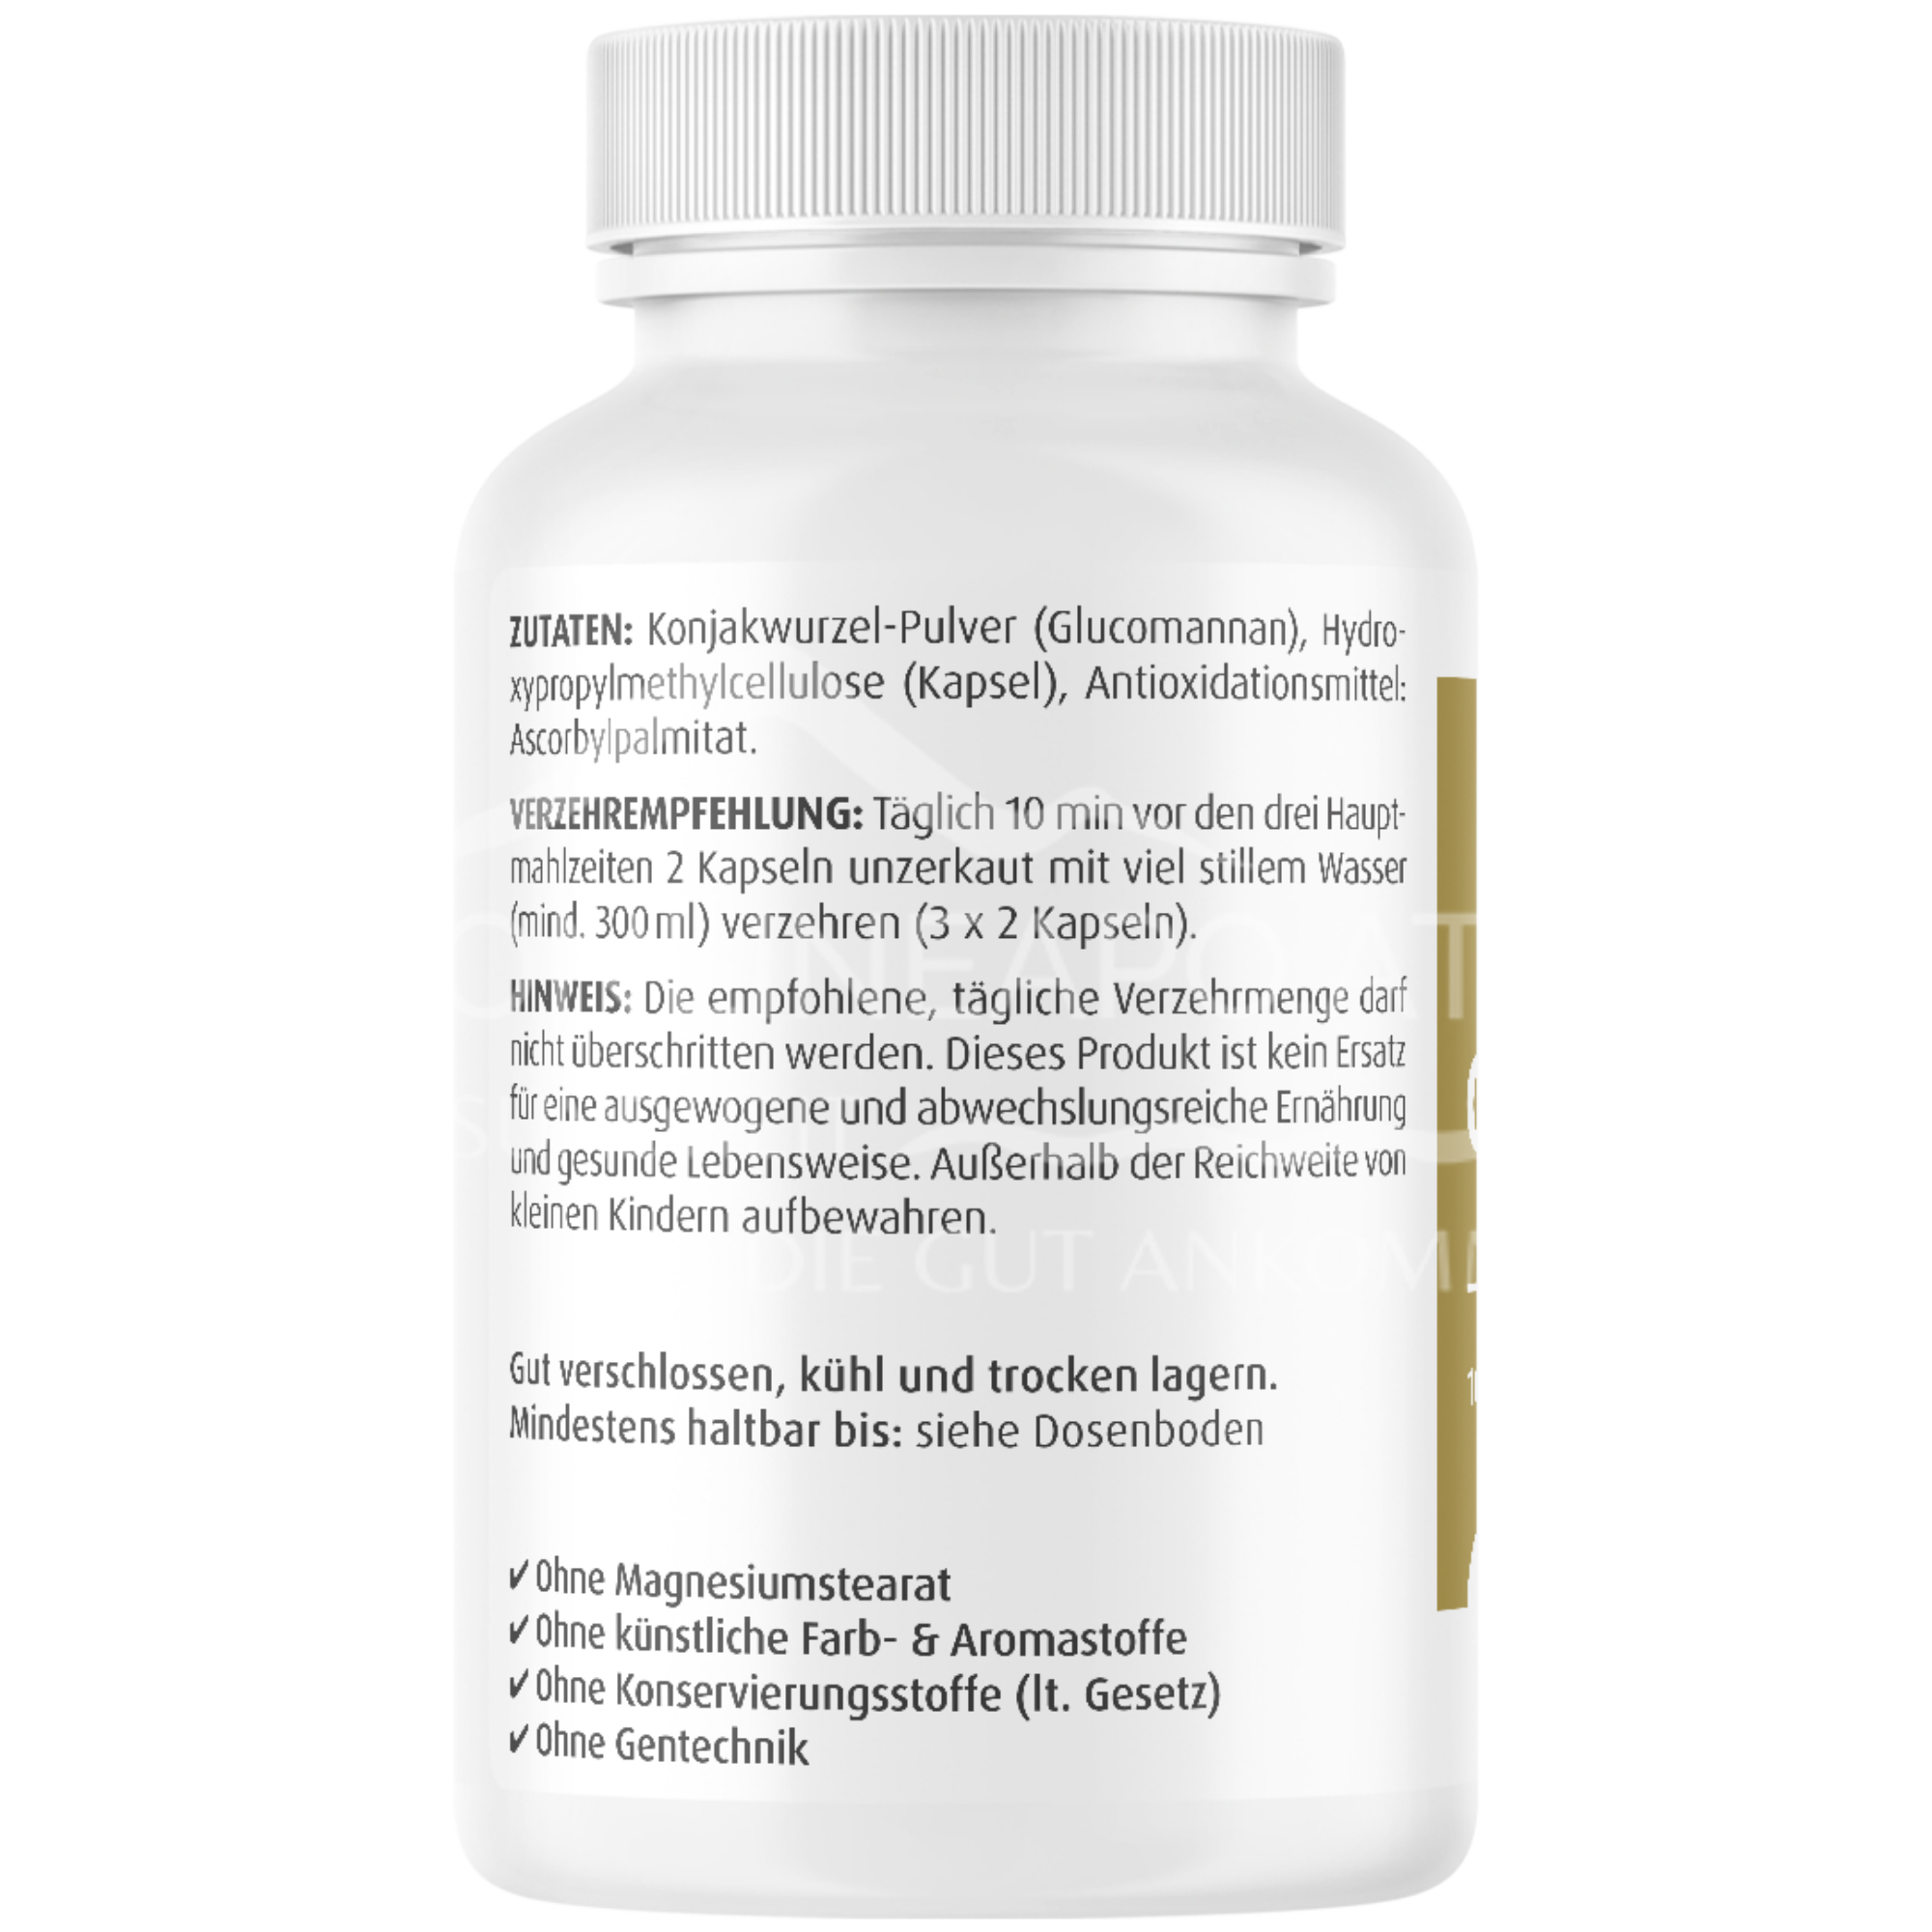 ZeinPharma Glucomannan 500 mg Kapseln